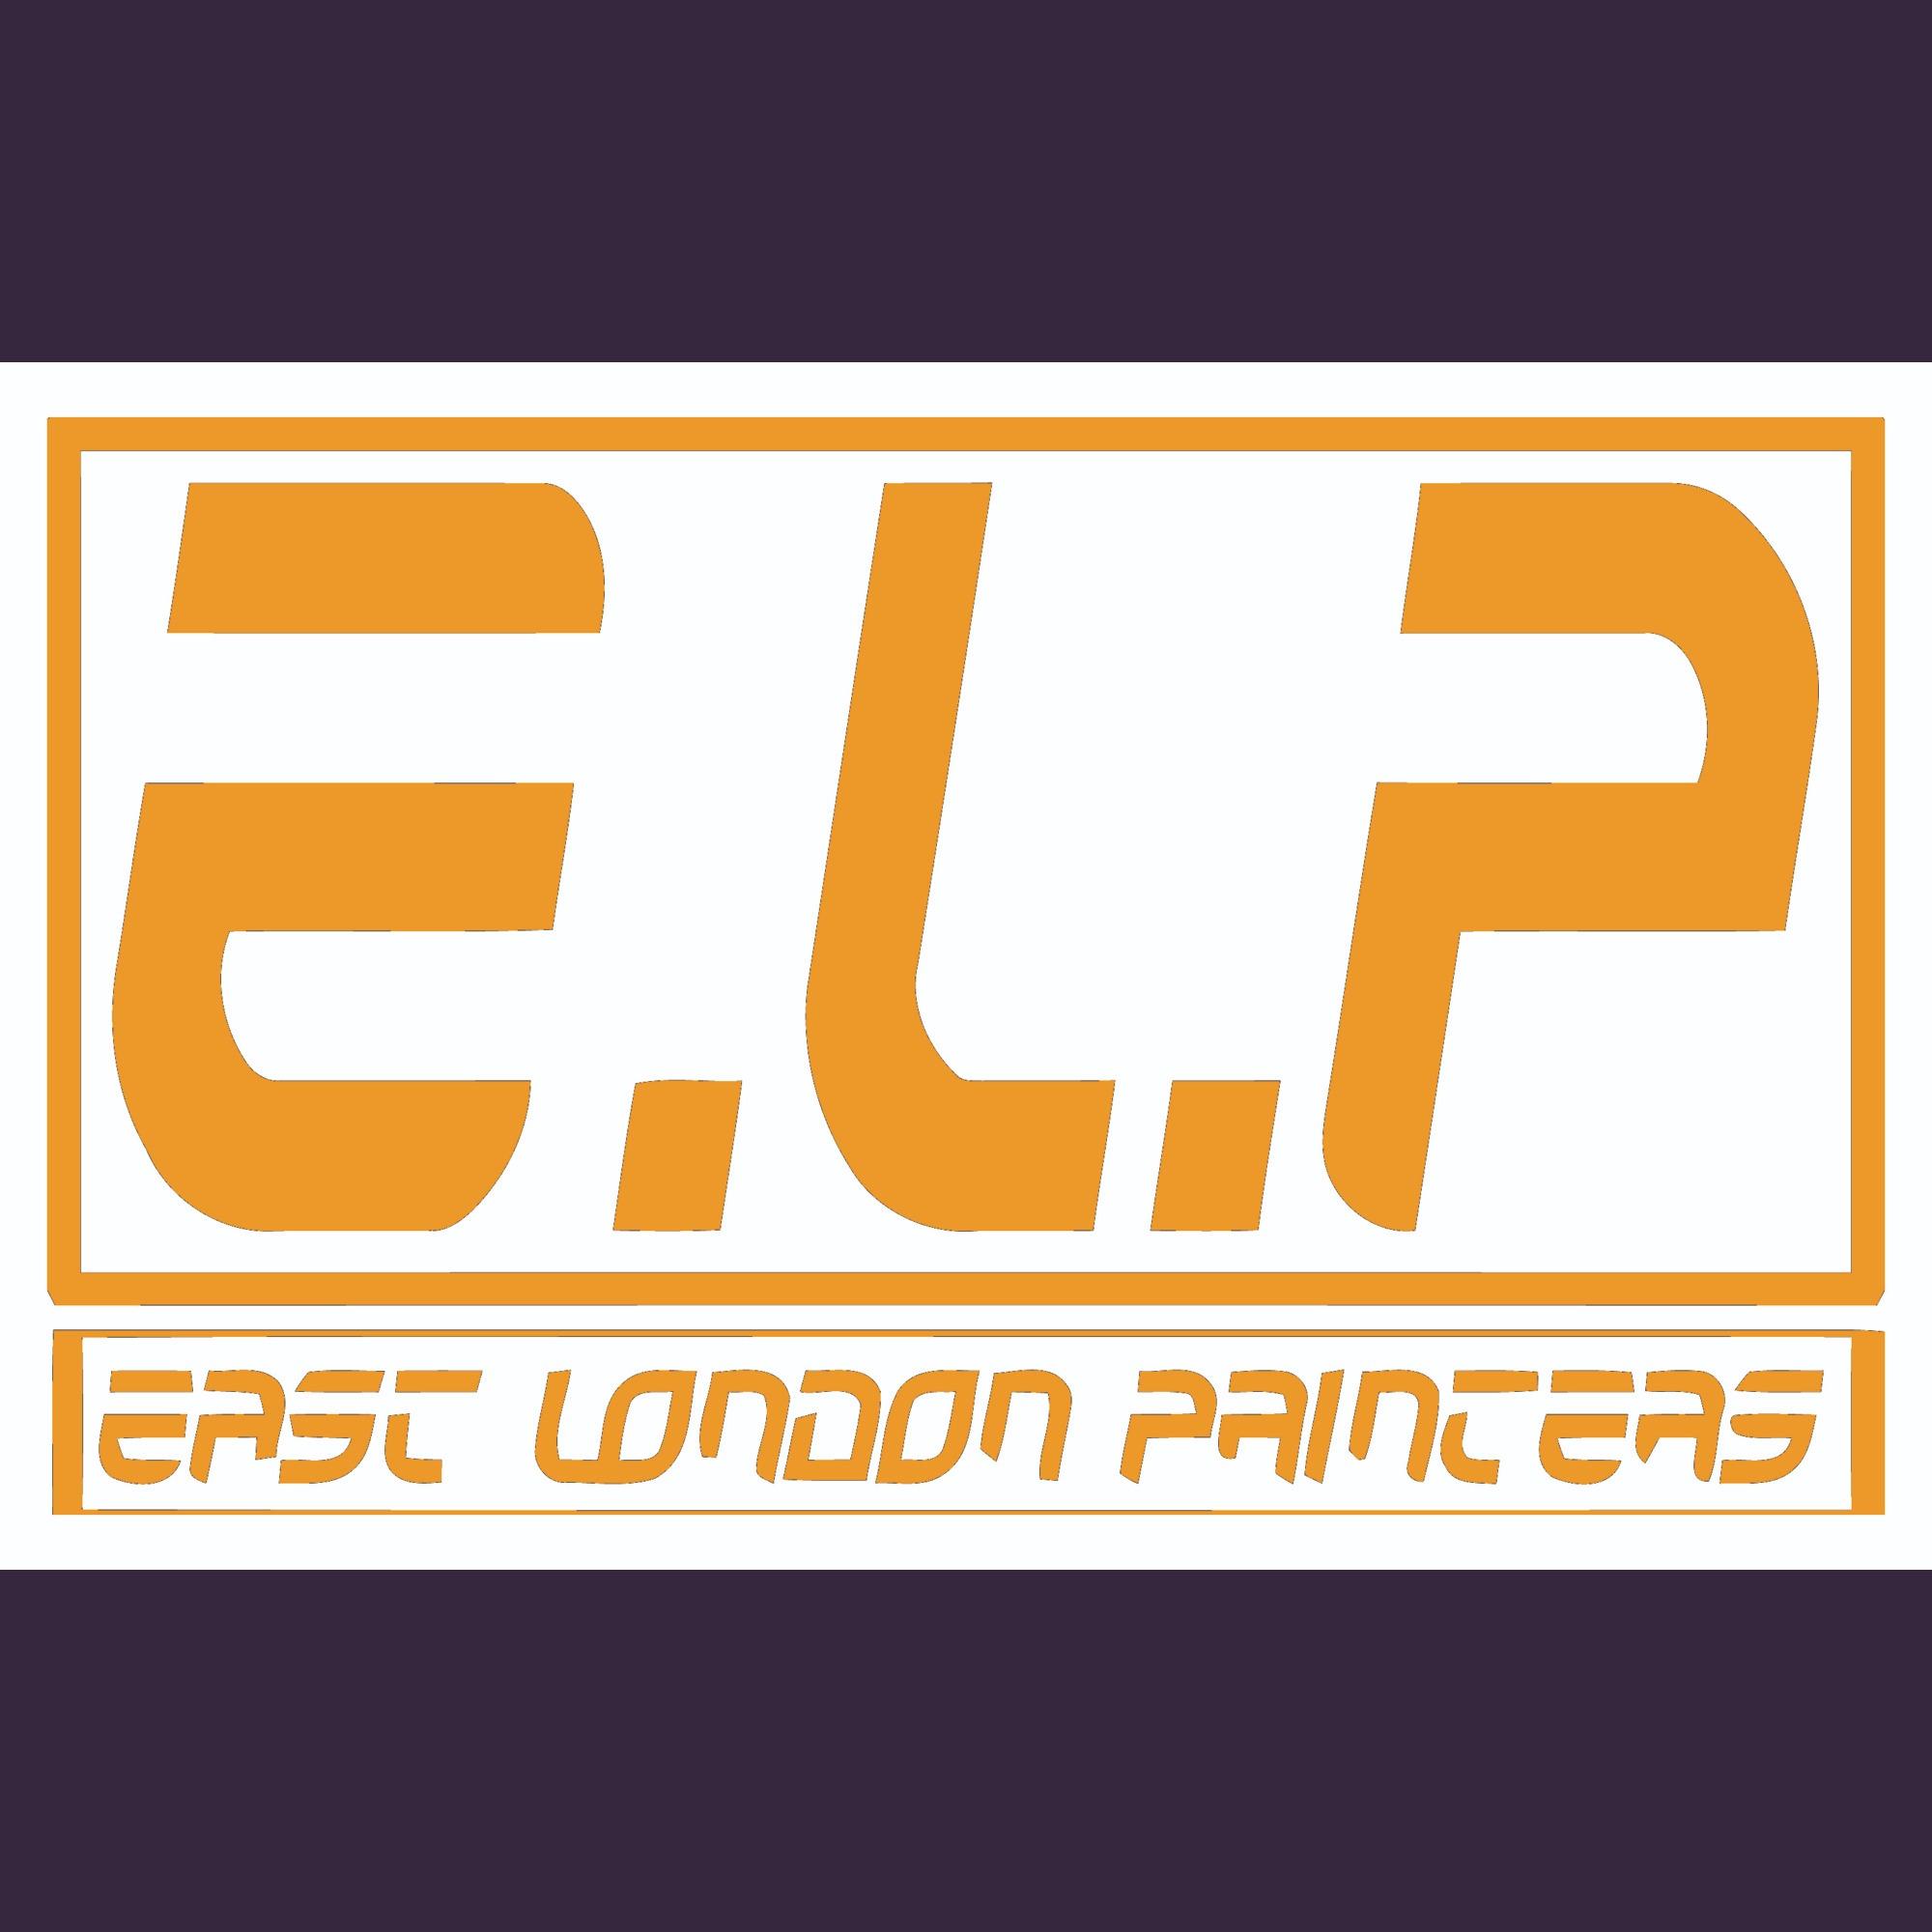 ELP LOGO East London Printers London 020 8925 2537